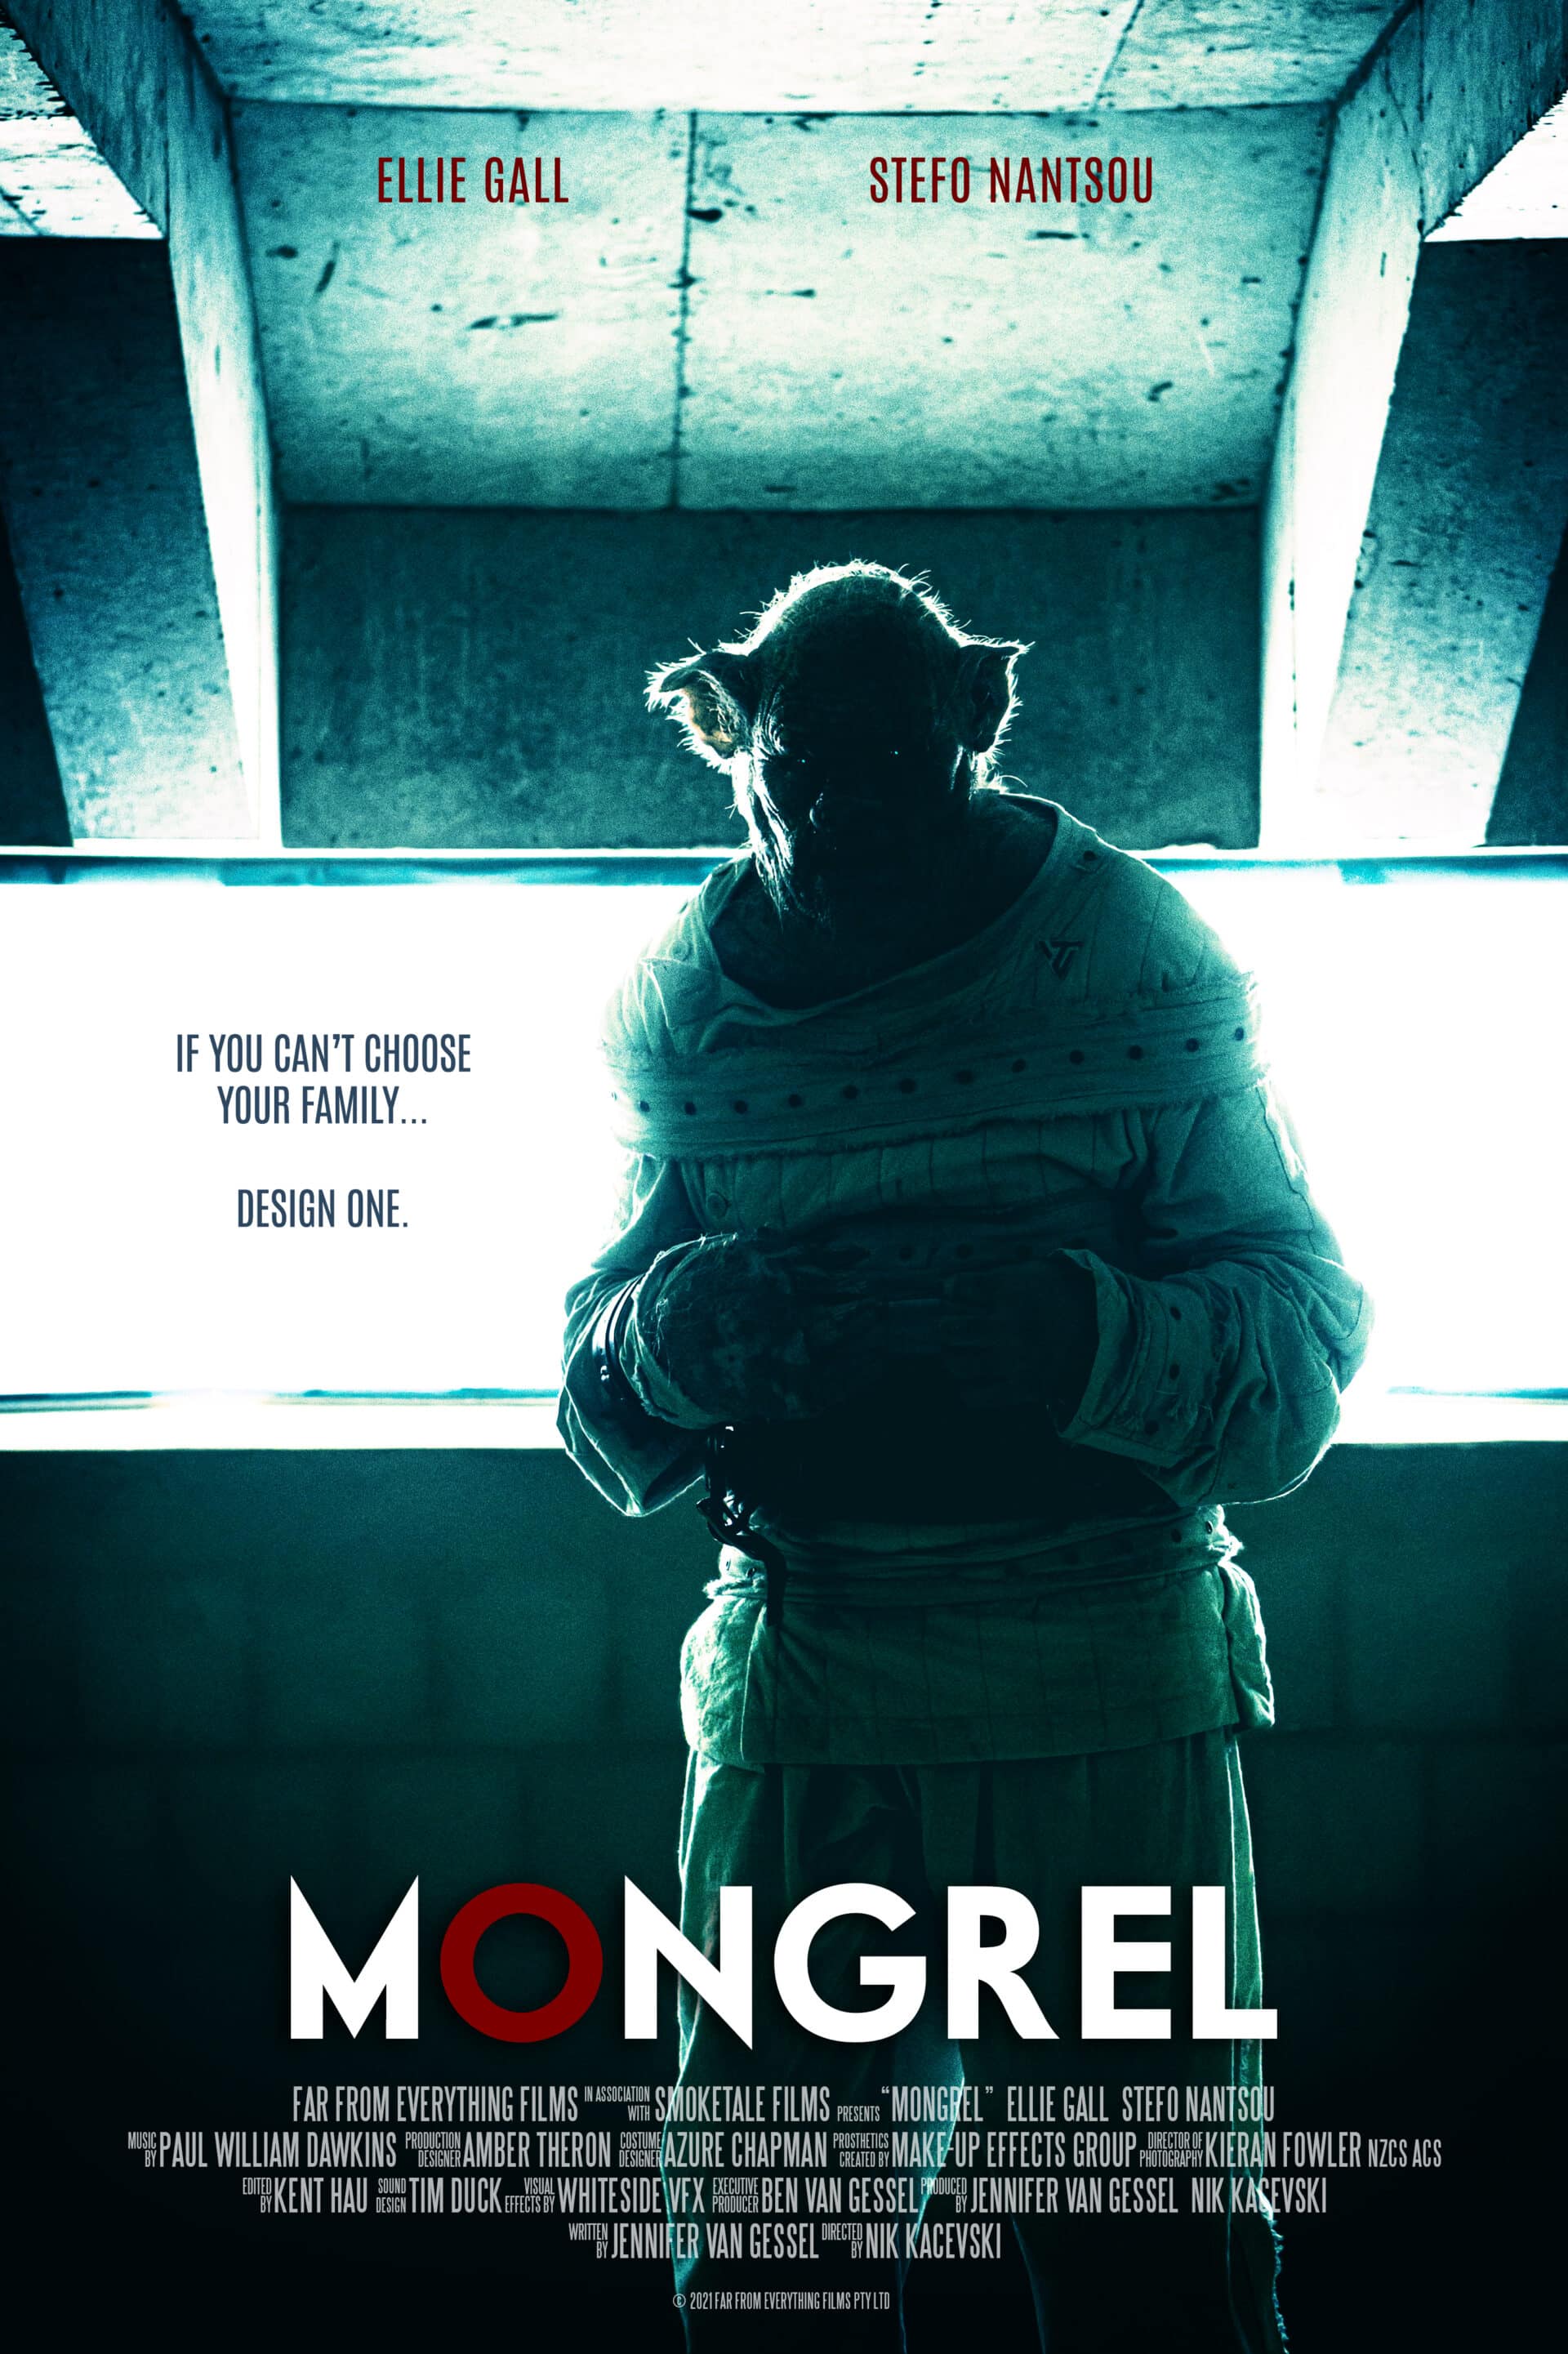 Poster for Mongrel. Foley: Infidel Studios.